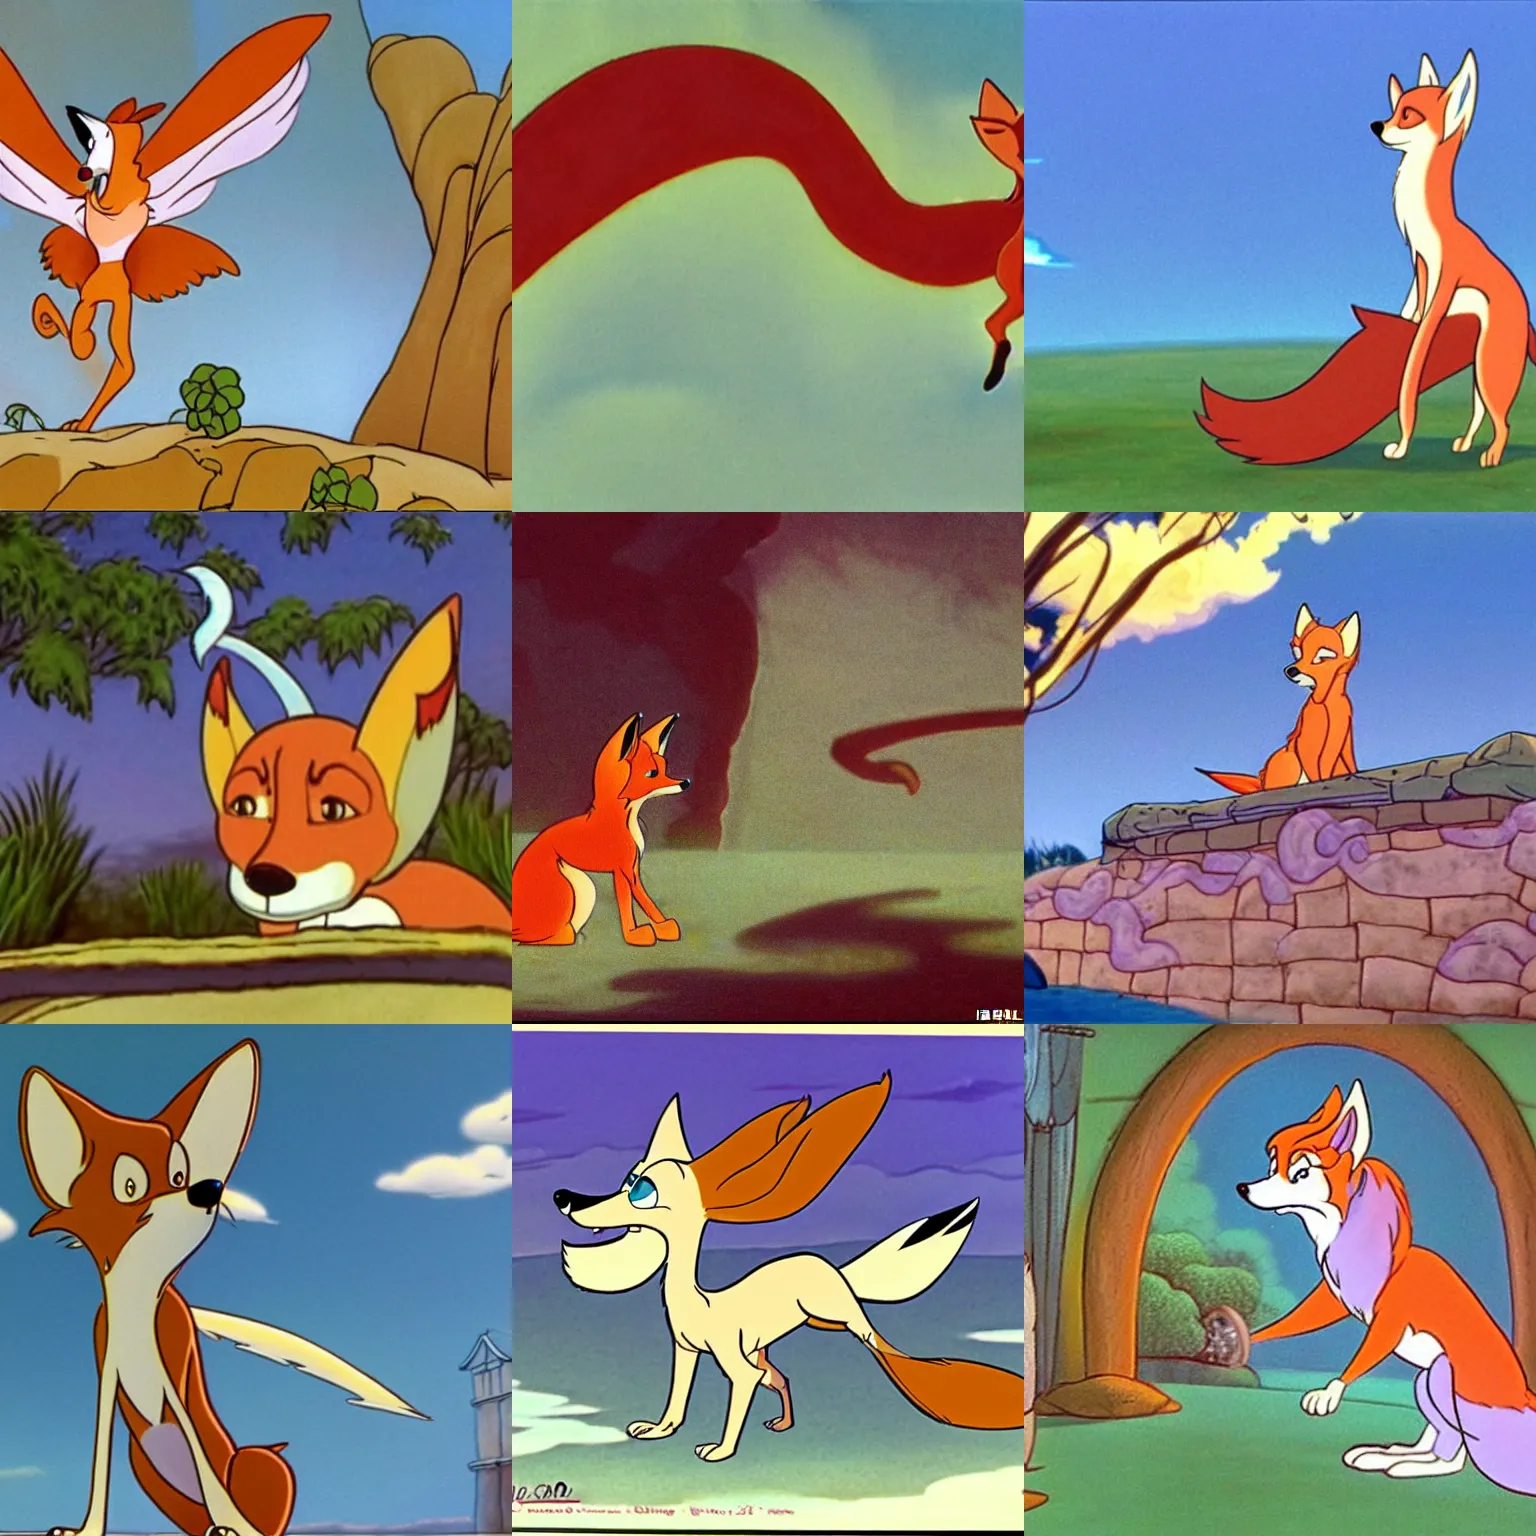 Wolfoo,Lucy,Pupu, Miumiu,Tokki and Lilly vs cartoon copying wolfoo 😠😠 on  Make a GIF